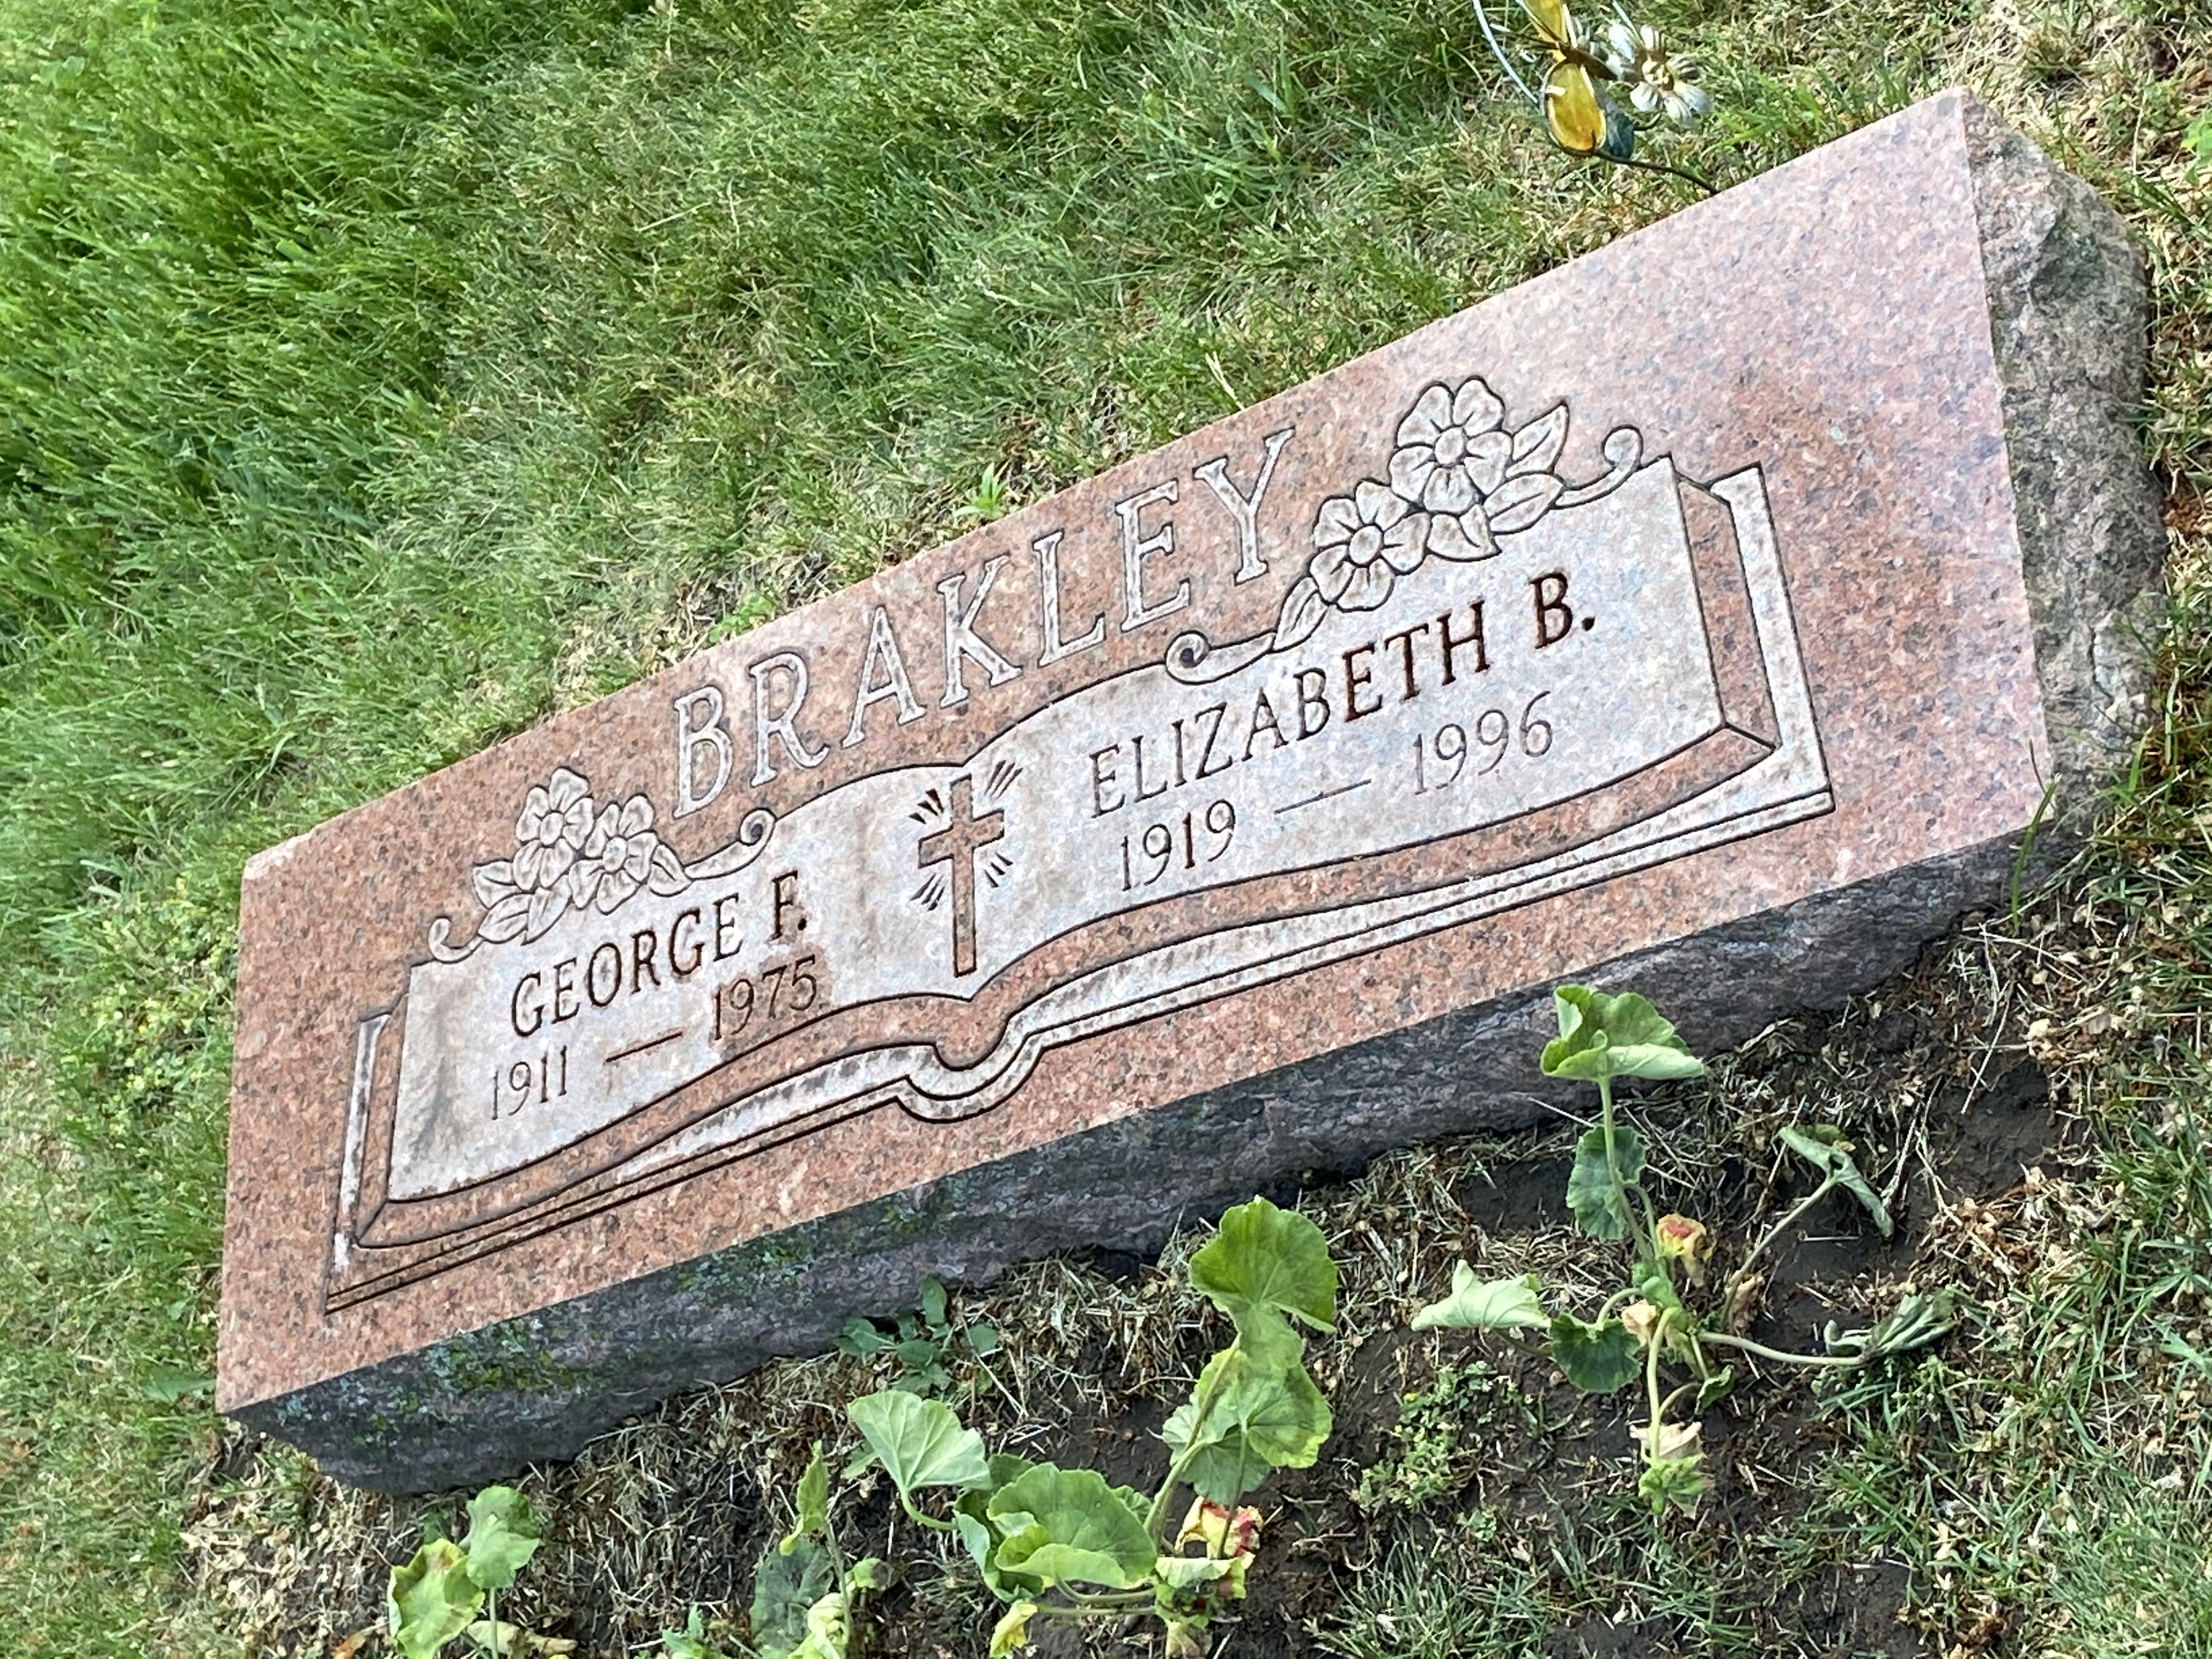 Headstone at Elizabeth grave 6/8/ 2021